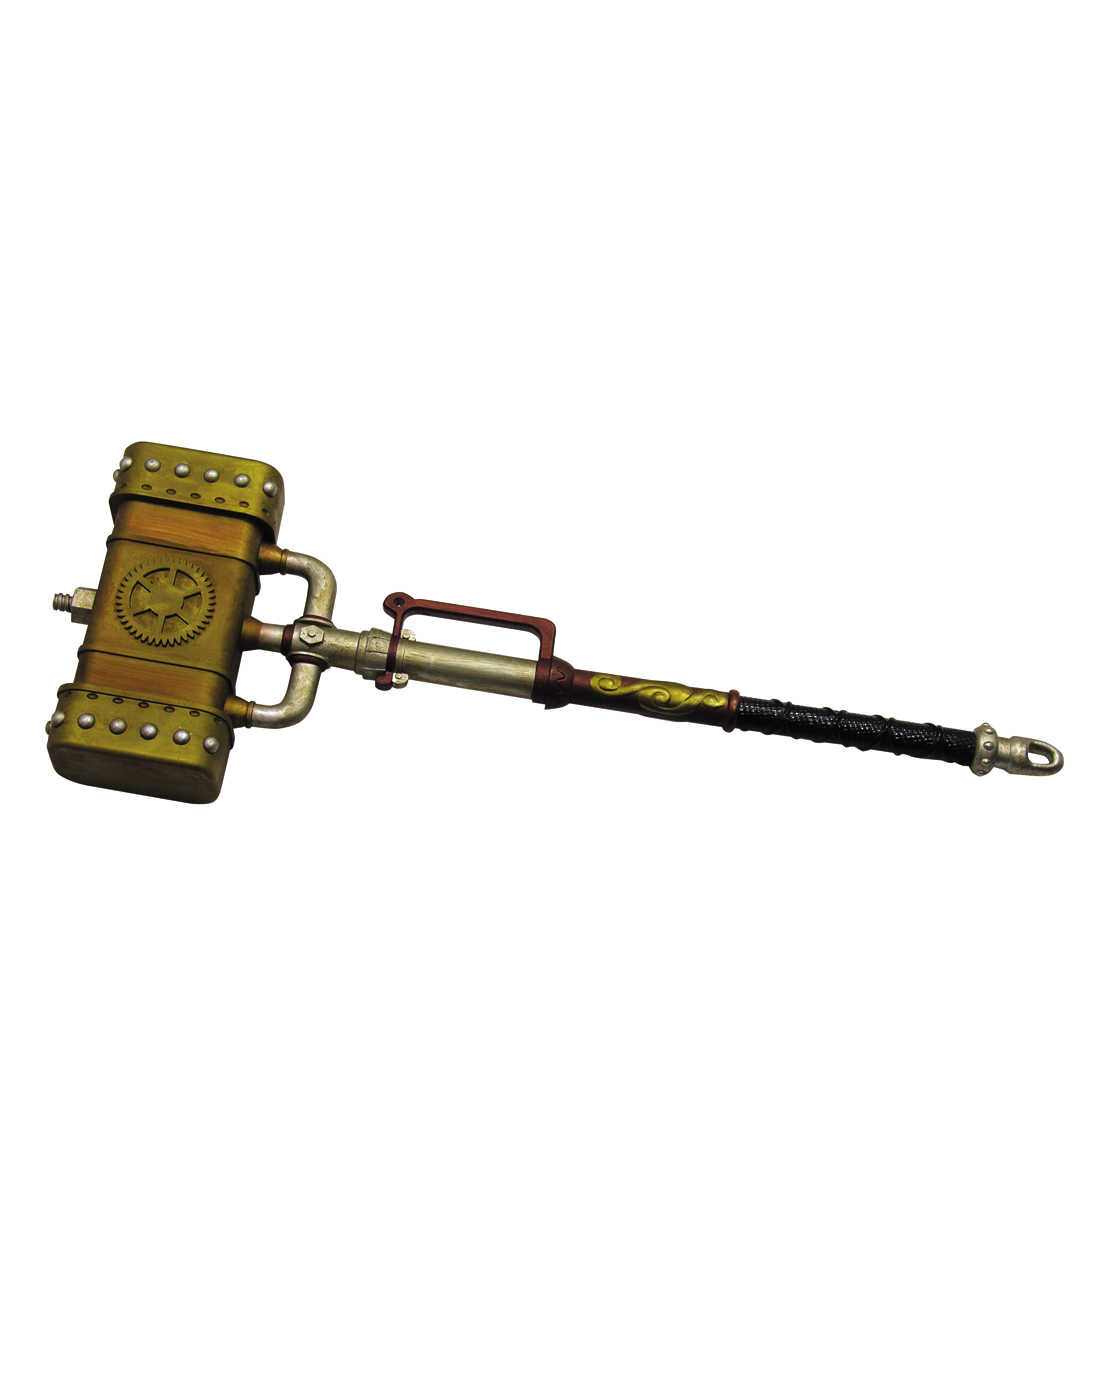 Forum Cosplay Steampunk Weapon Mallet Sledge Hammer, Gold Silver, 24.5'